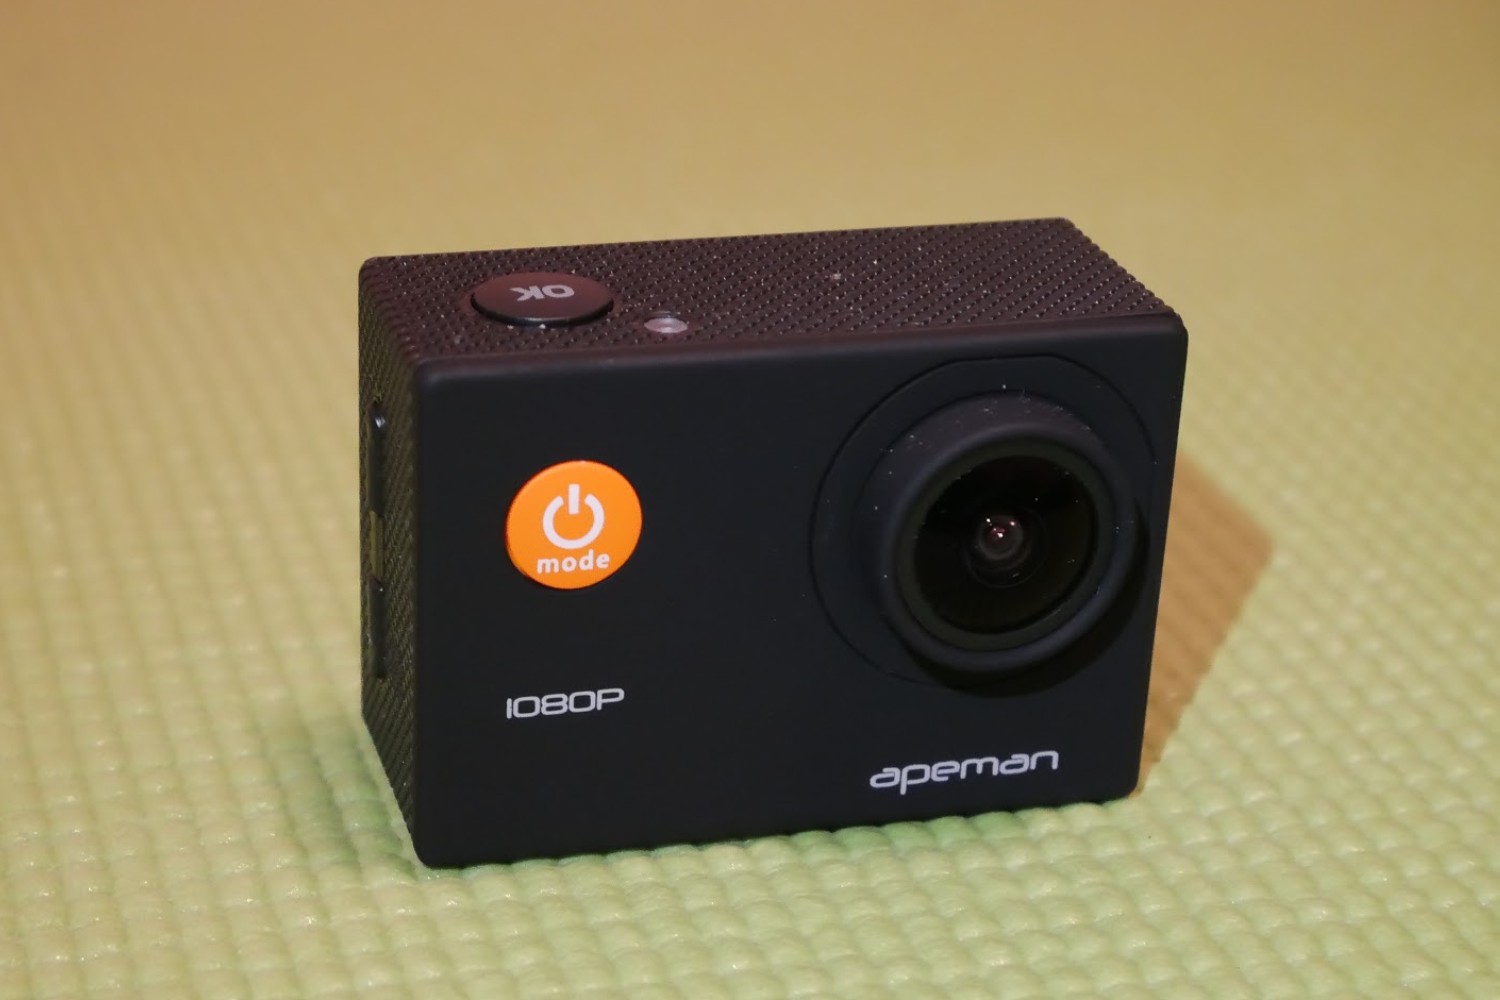 How To Attach An Action Camera Model: A66 Apeman To A Gun